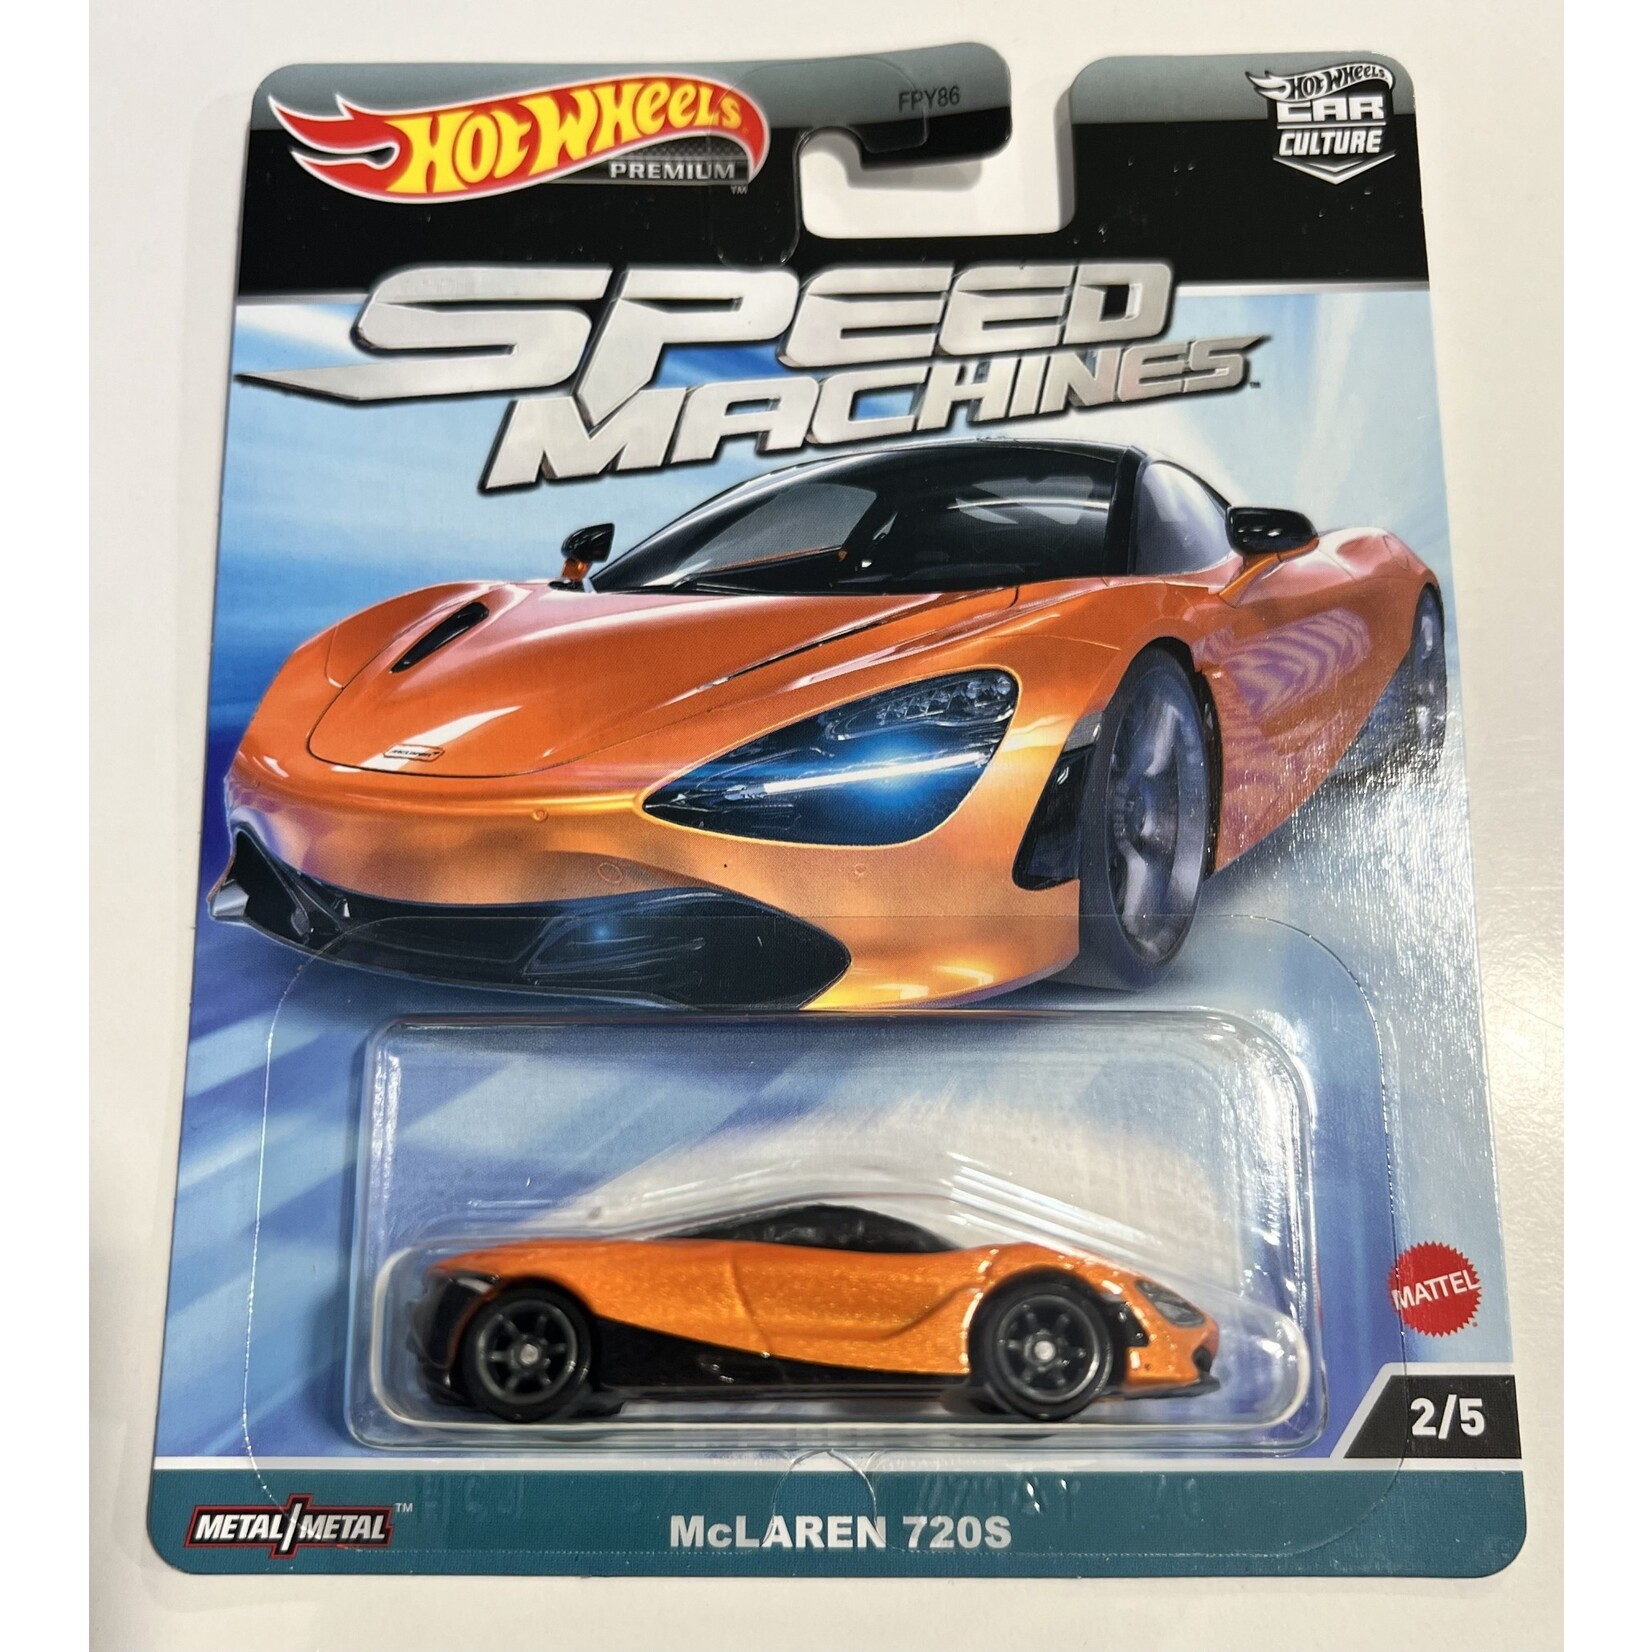 Hot Wheels Speed Machines McLaren 720S 2/5 Premium